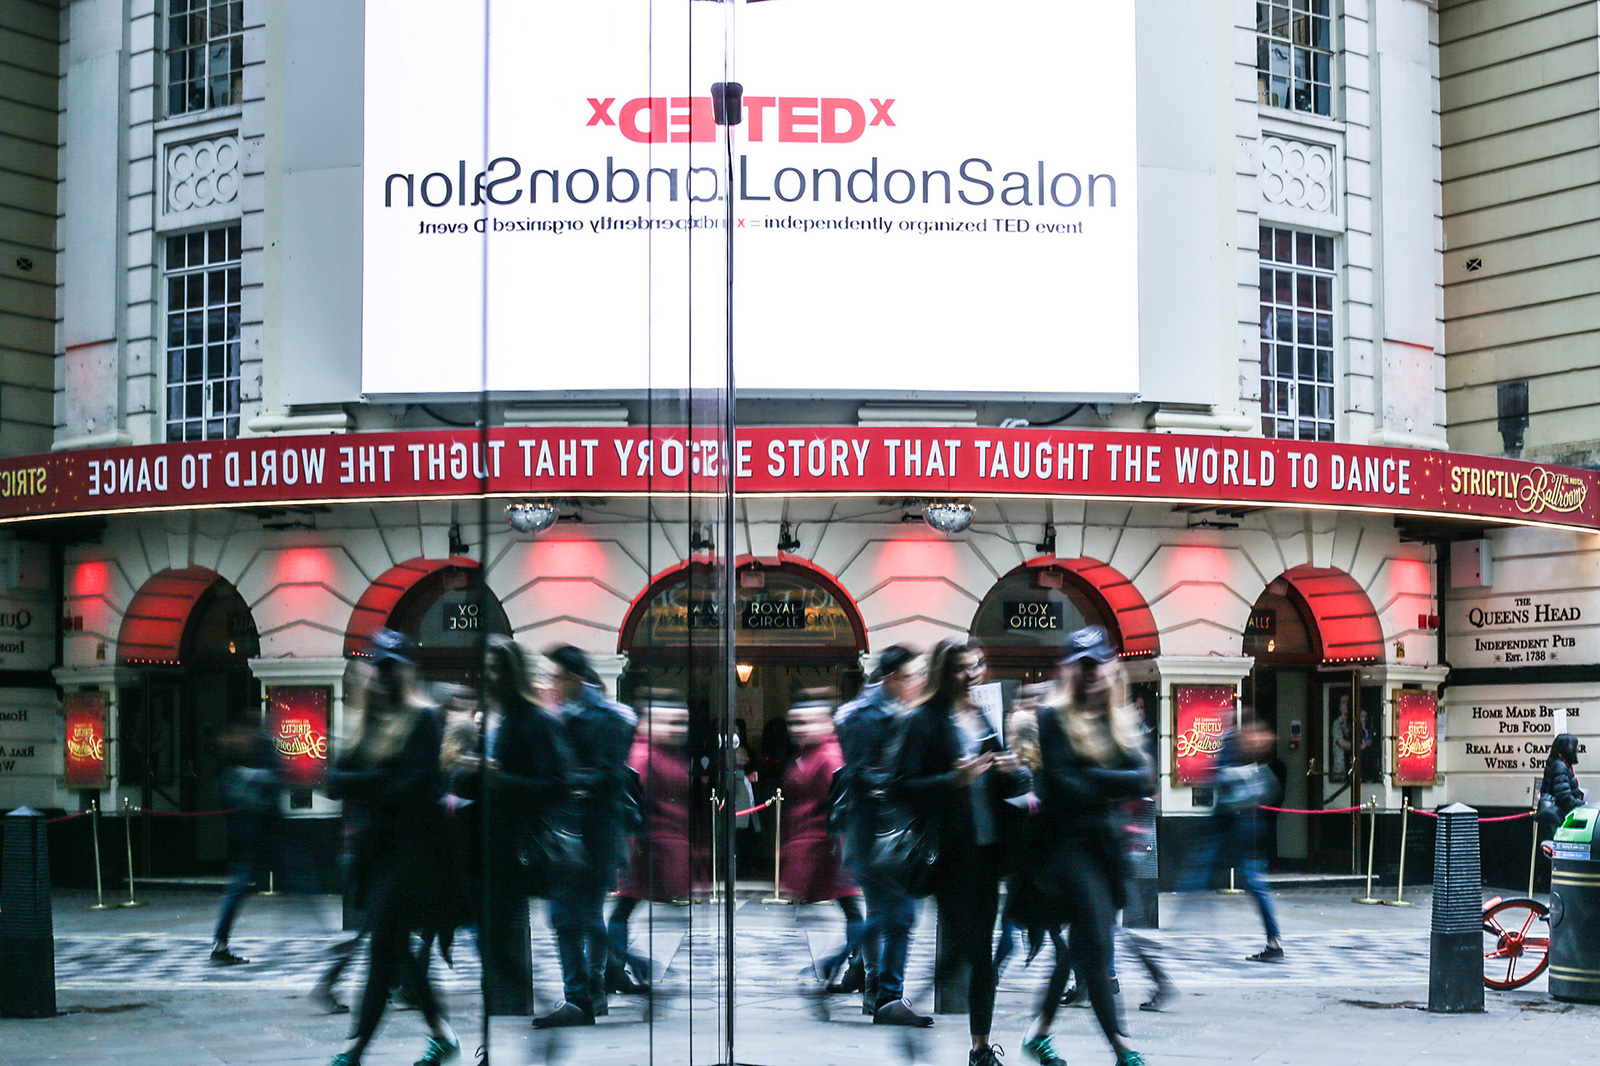 Tedx London's office exterior